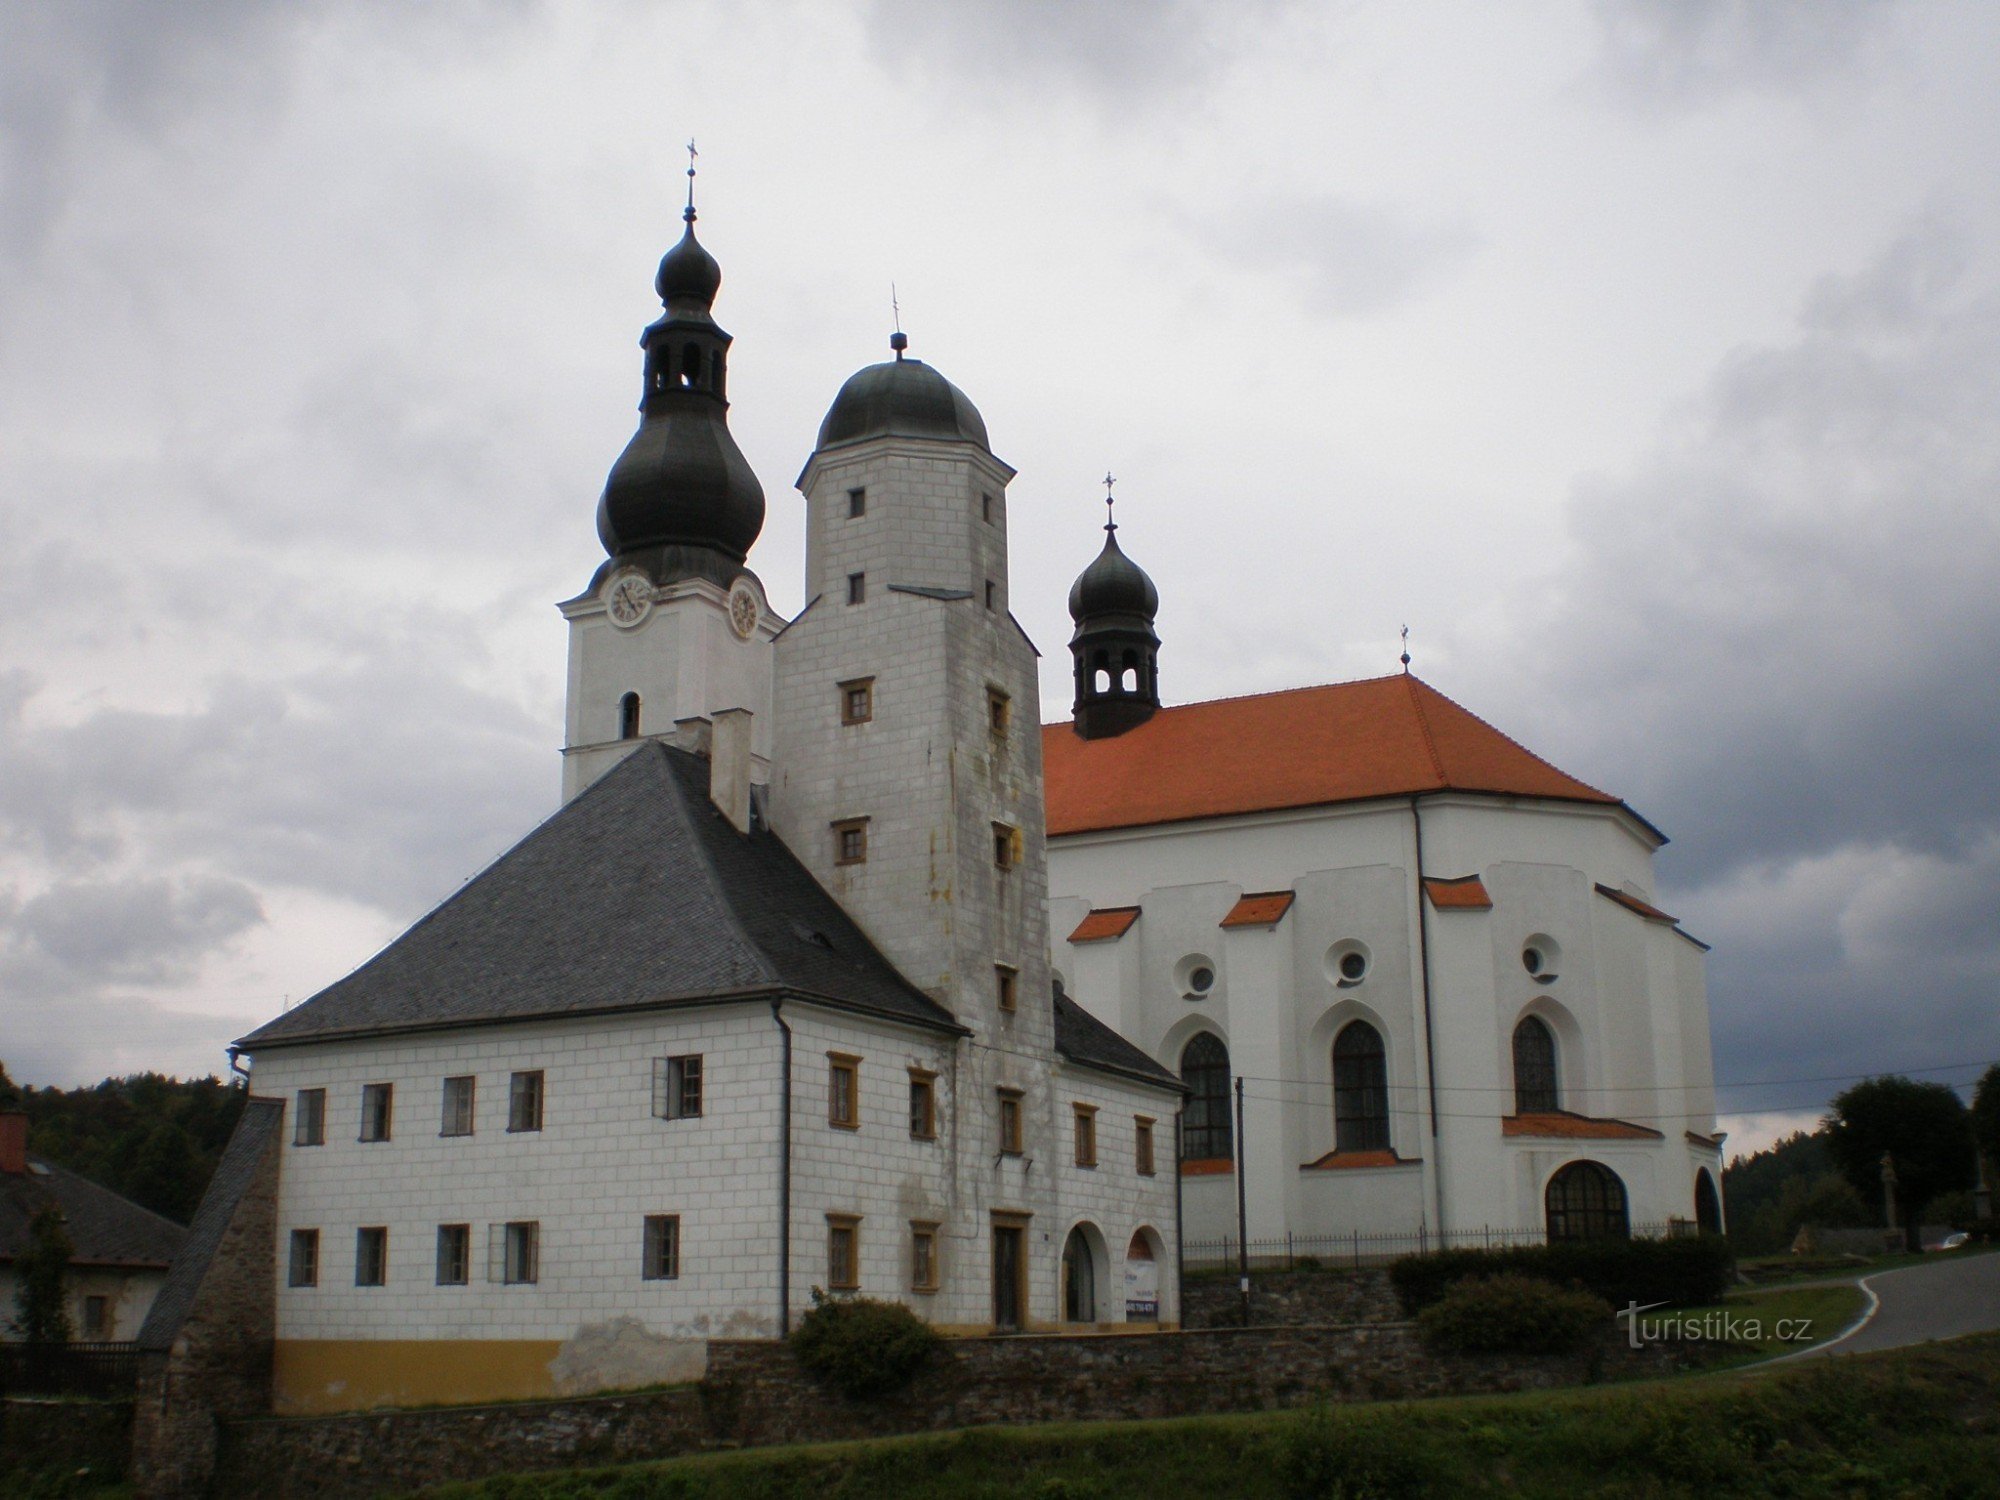 Branná - замок і костел